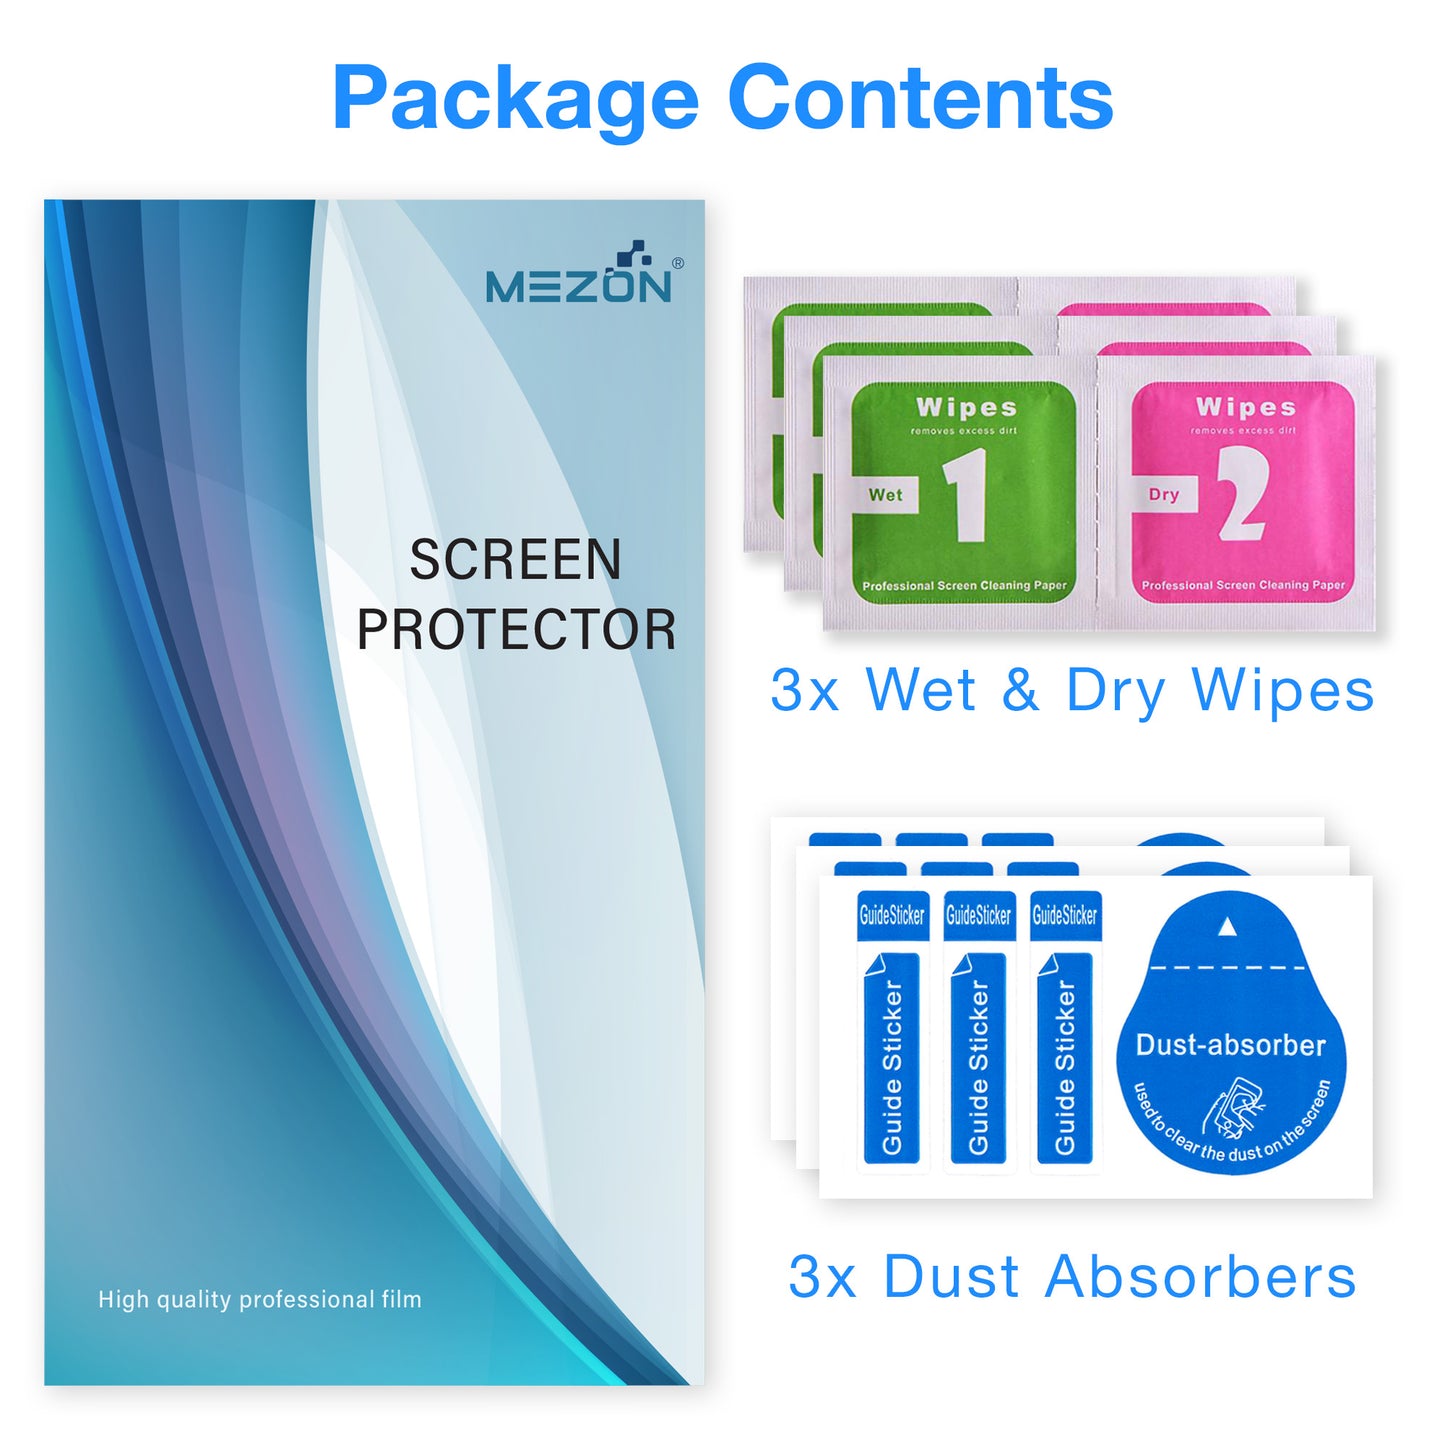 [3 Pack] MEZON Google Pixel 6 (6.4") Anti-Glare Matte Screen Protector Case Friendly Film (Pixel 6, Matte)